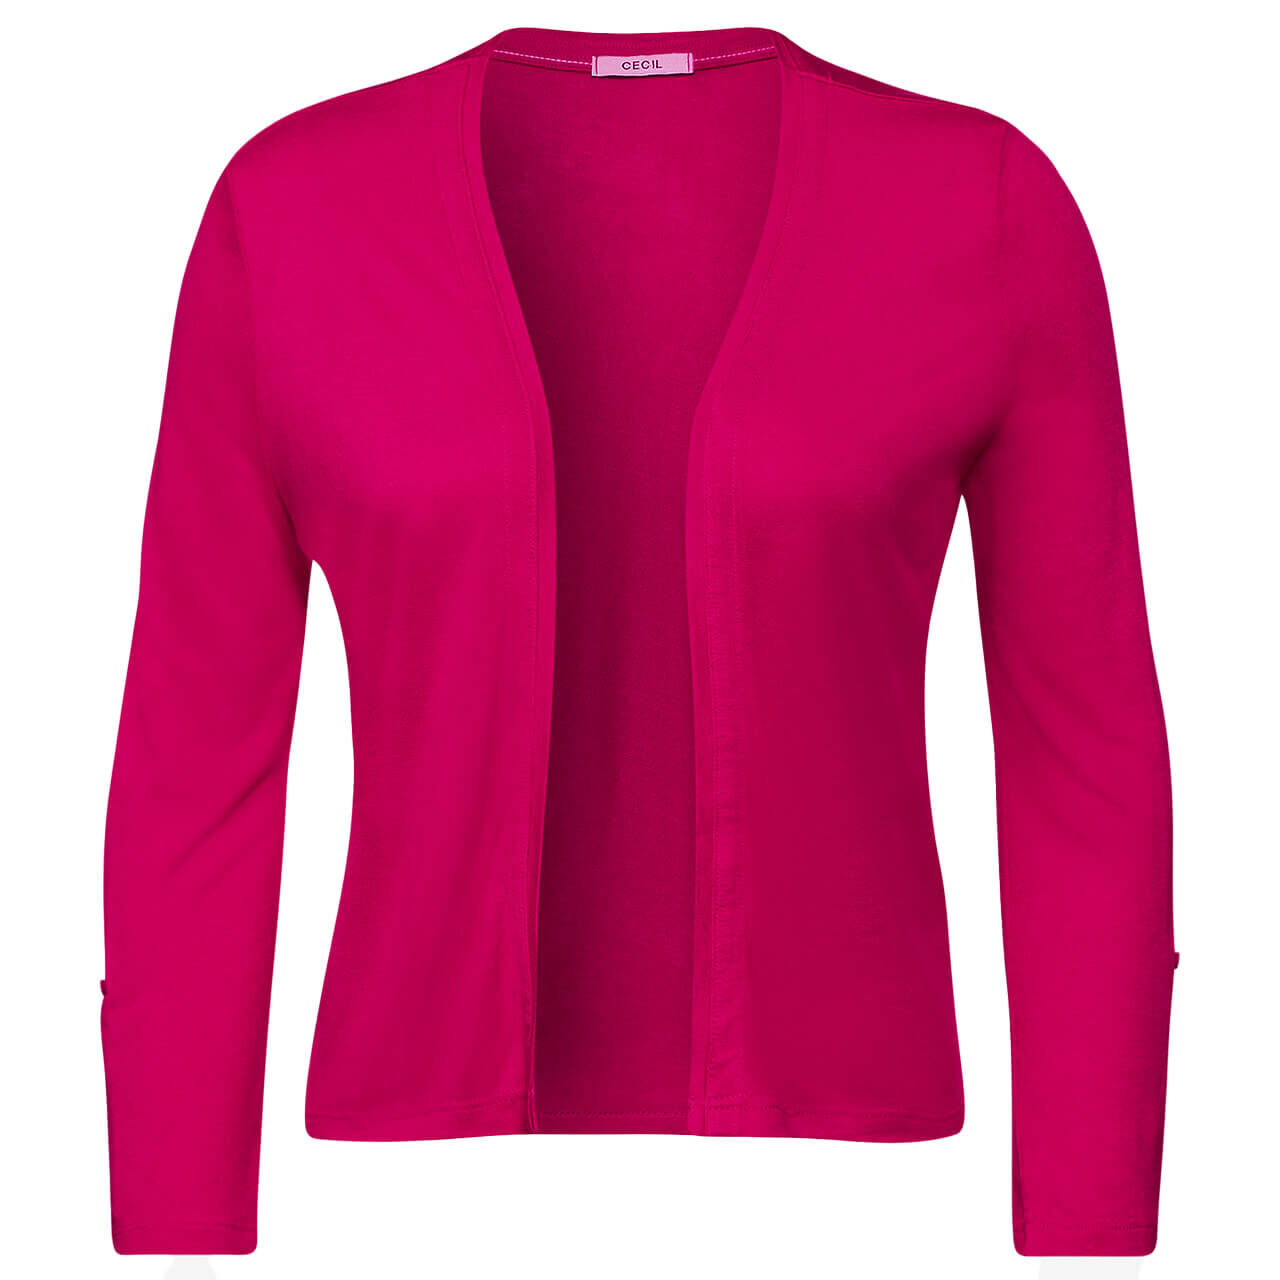 Cecil Damen 3/4 Arm Shirtjacke pink sorbet